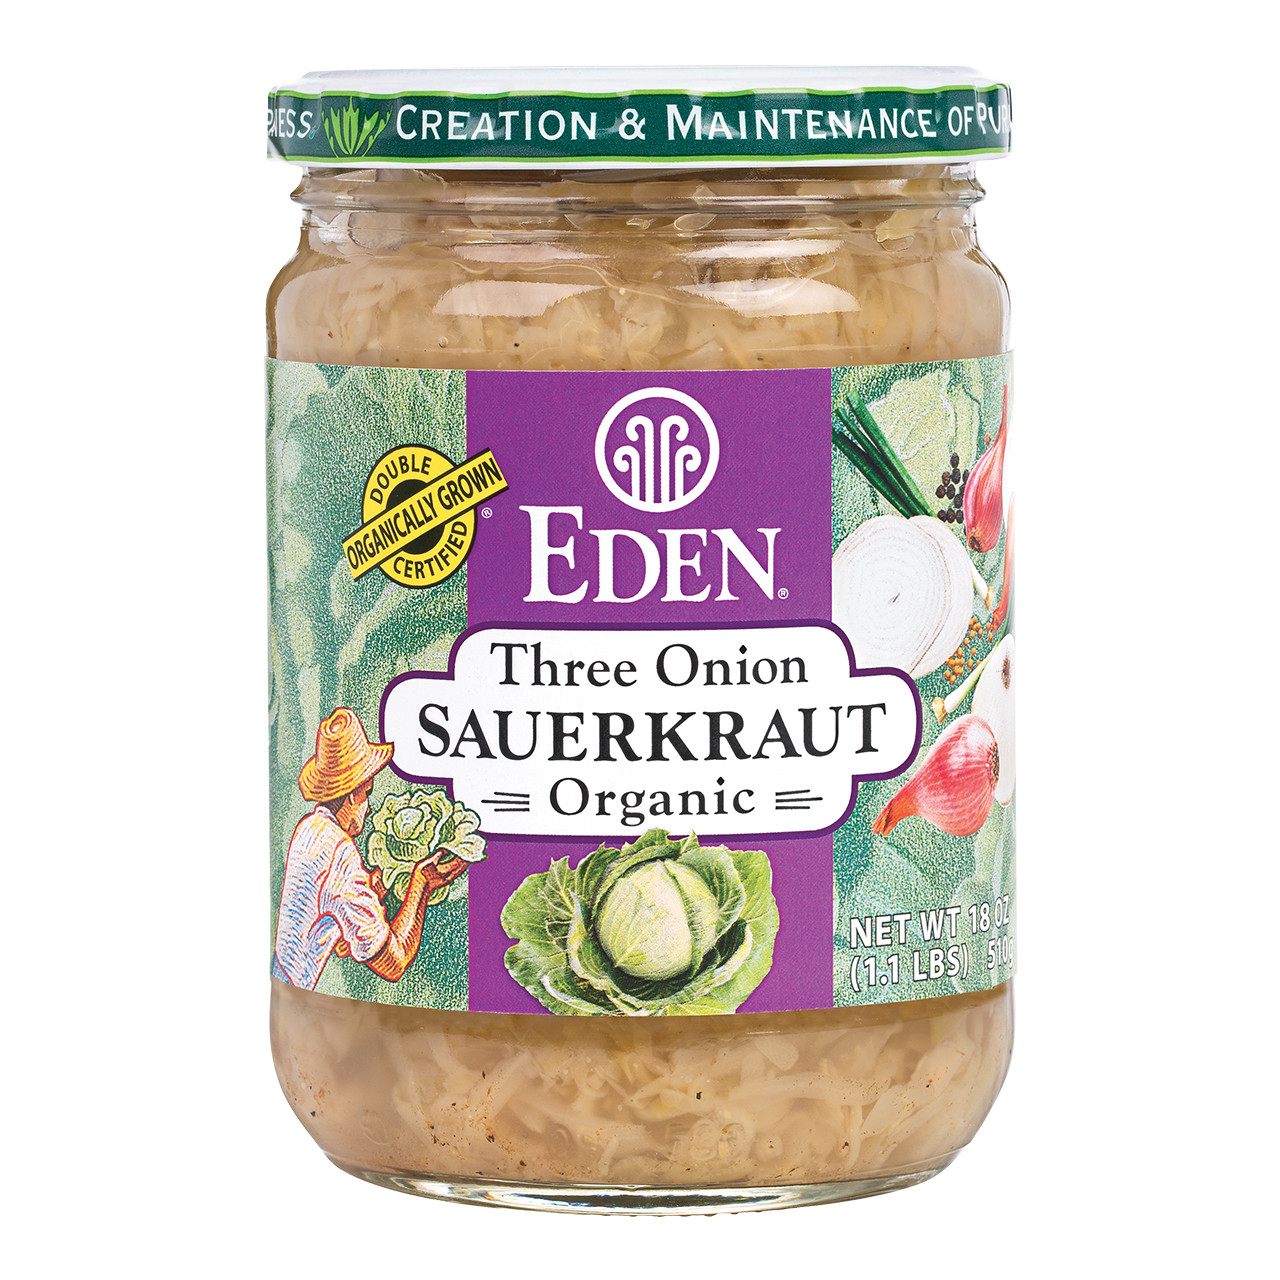 Sauerkraut - Three Onion, Organic - 18 oz